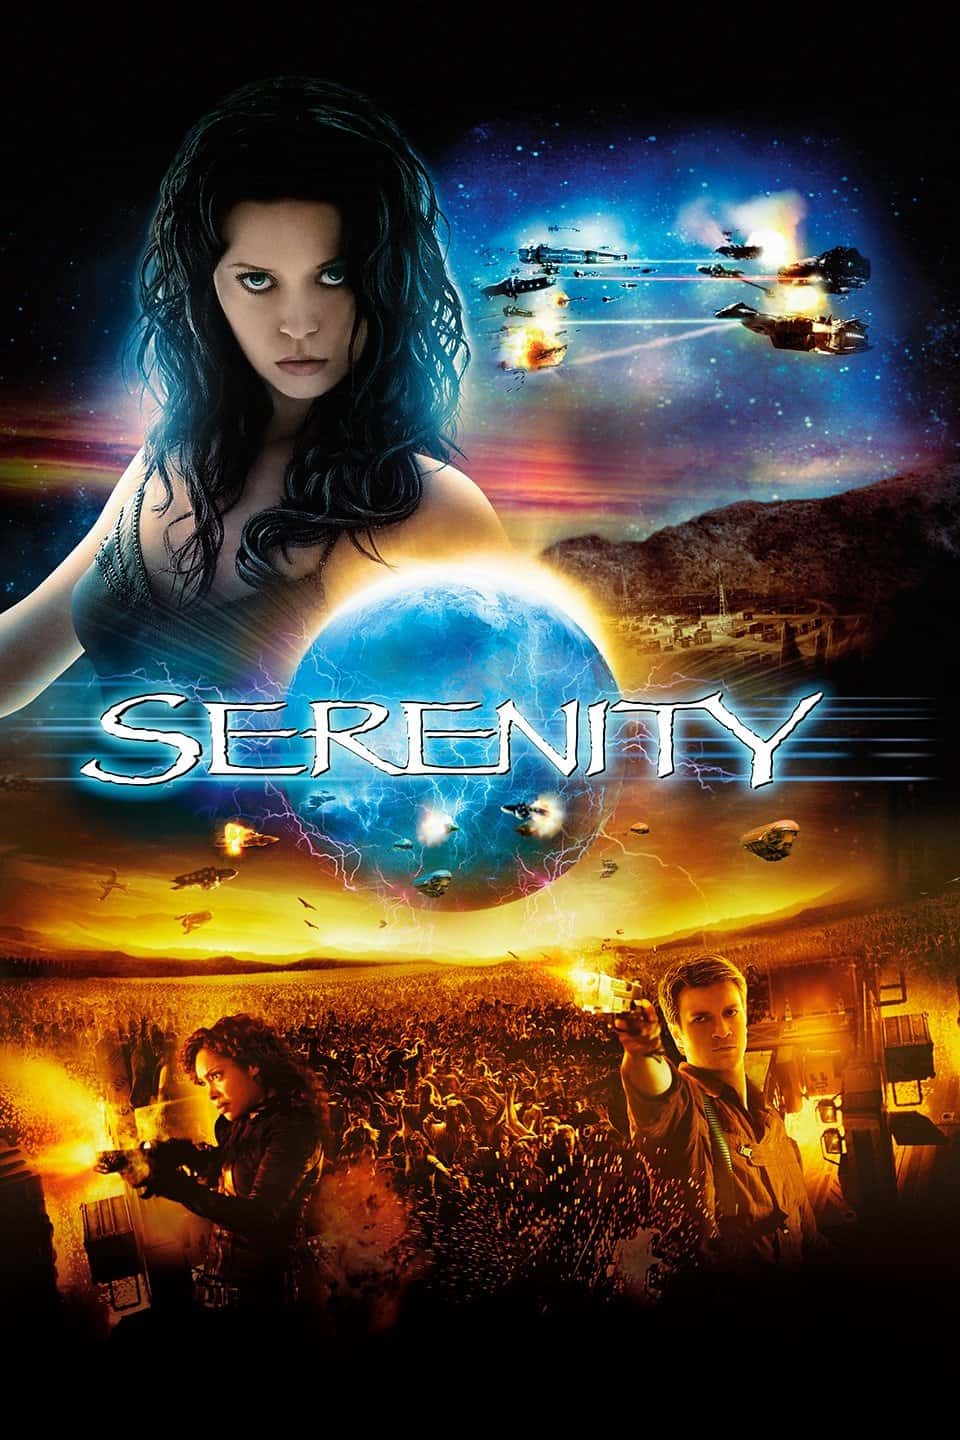 Serenity, 2005 